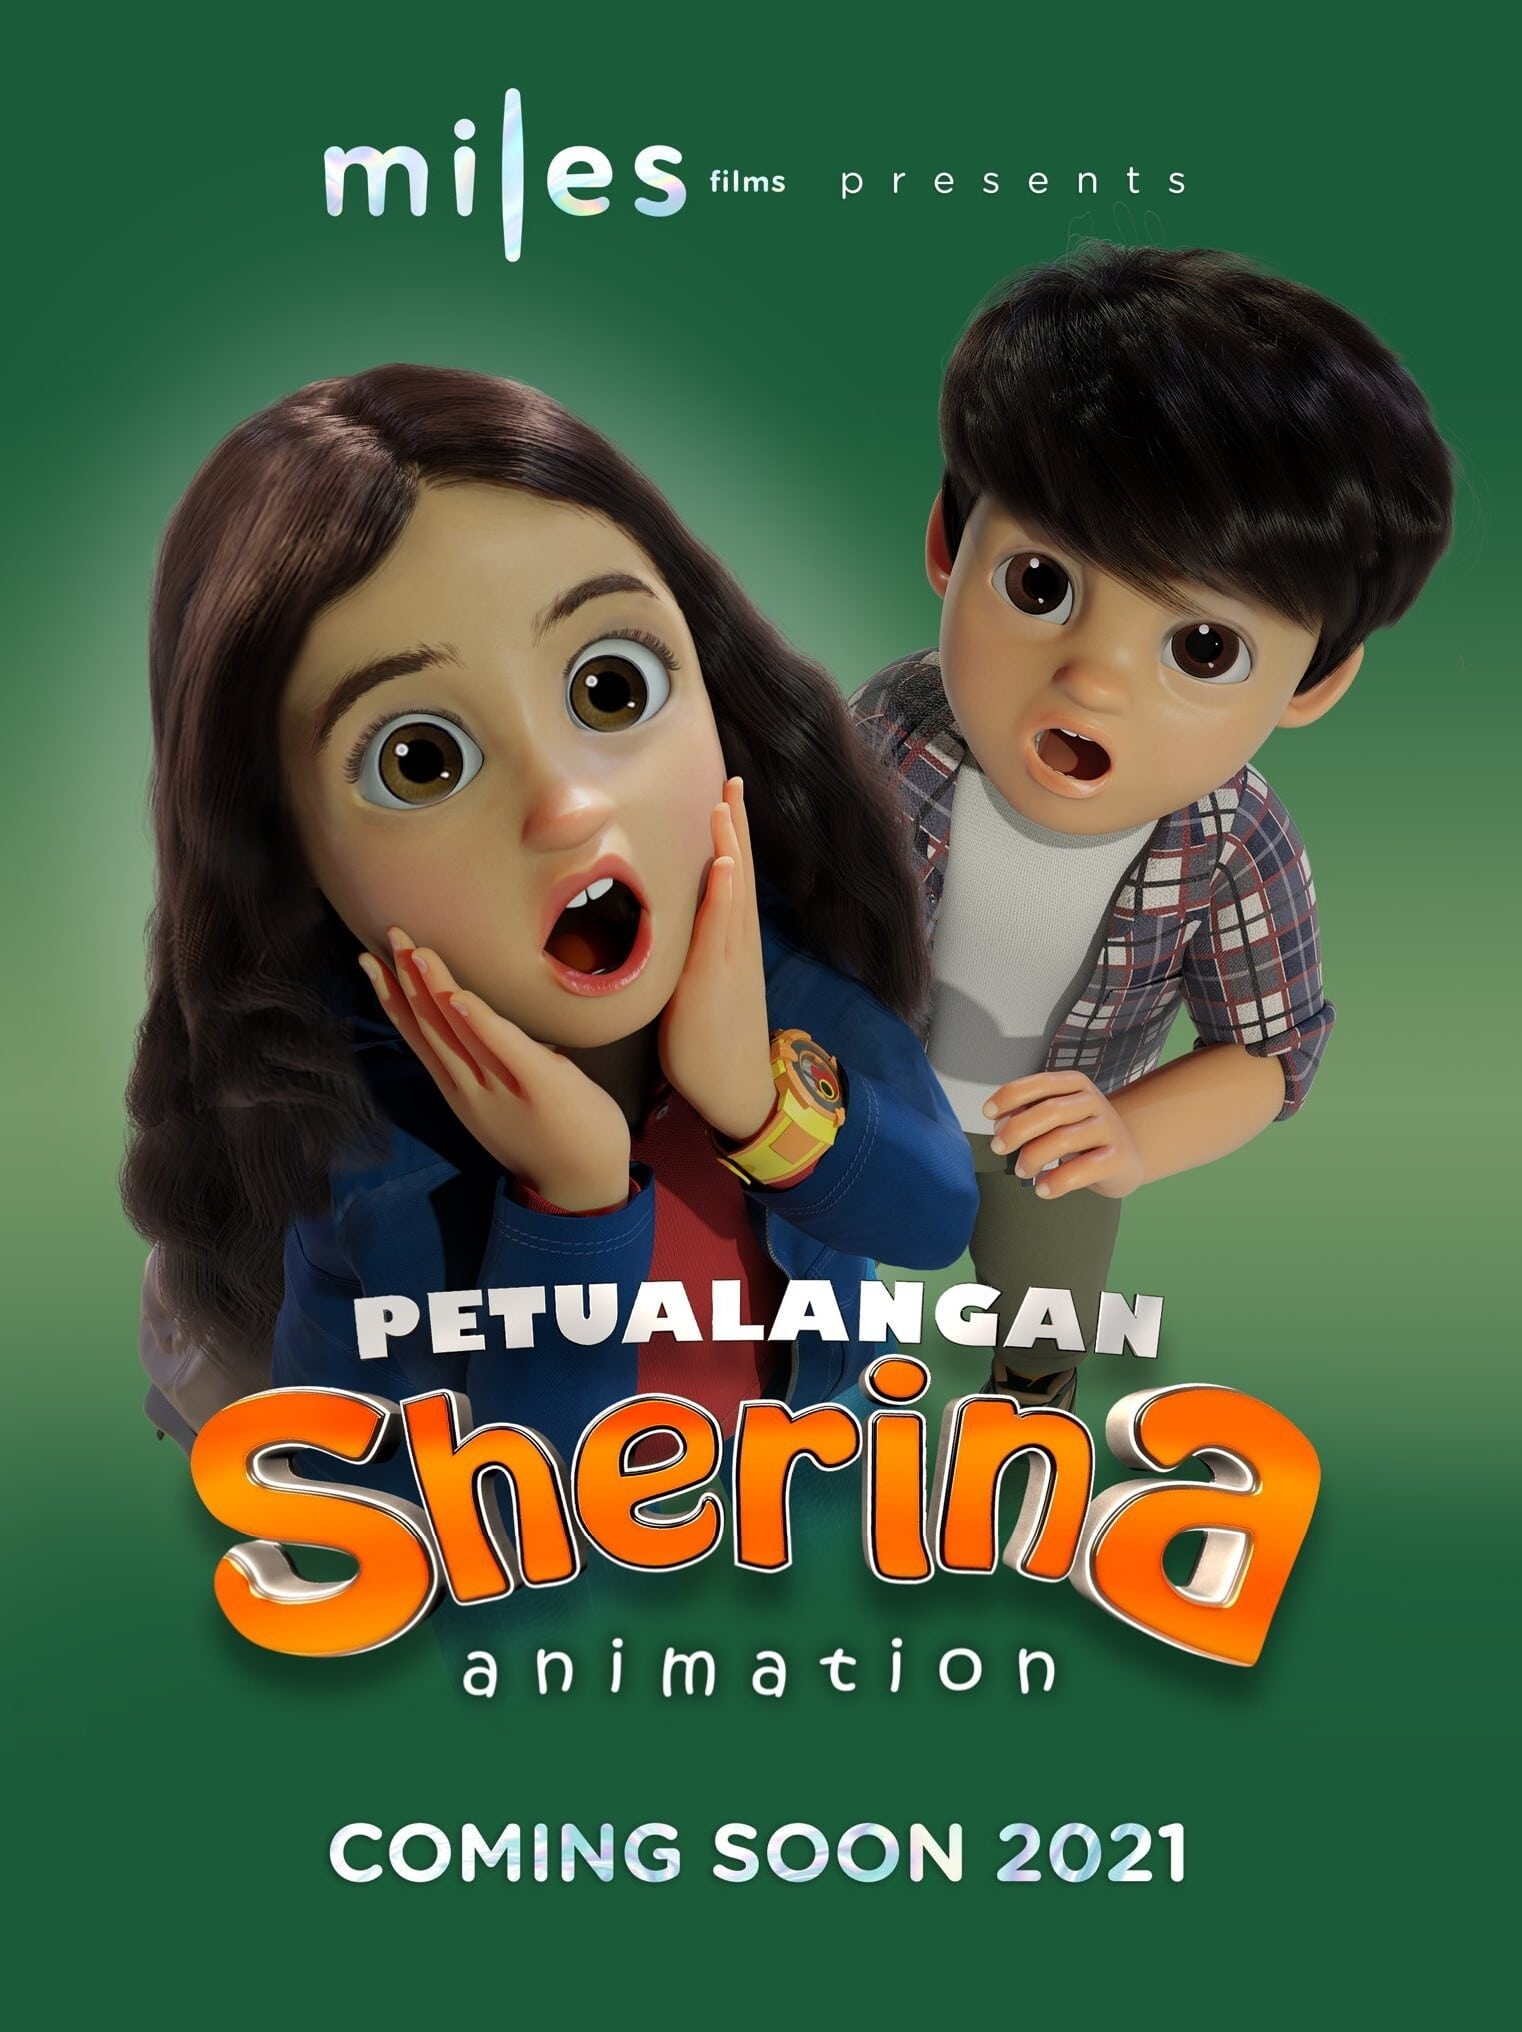 Sherina's Adventure Animation